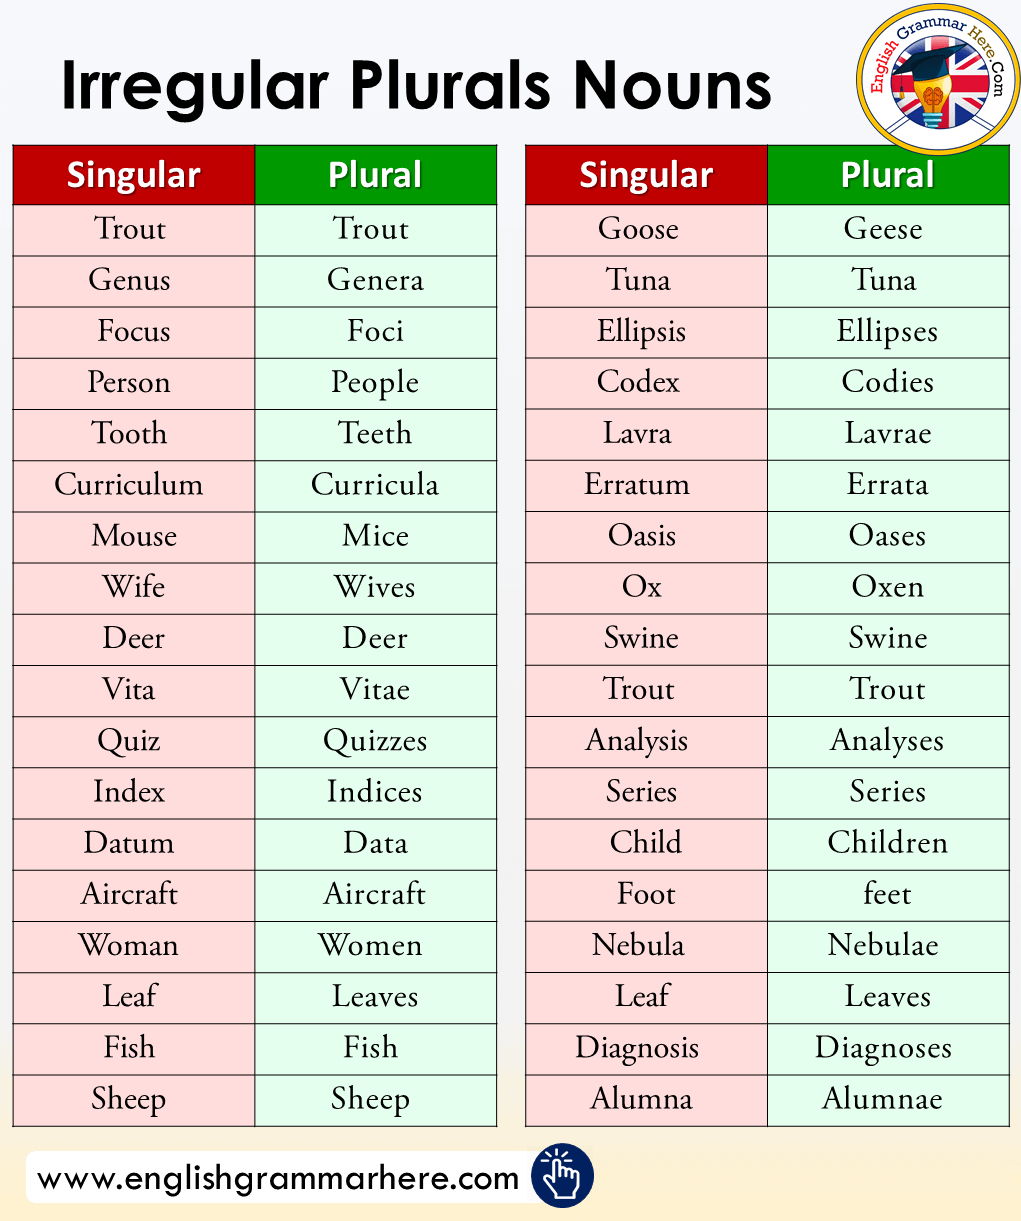 Detailed Irregular Plurals Nouns List in English